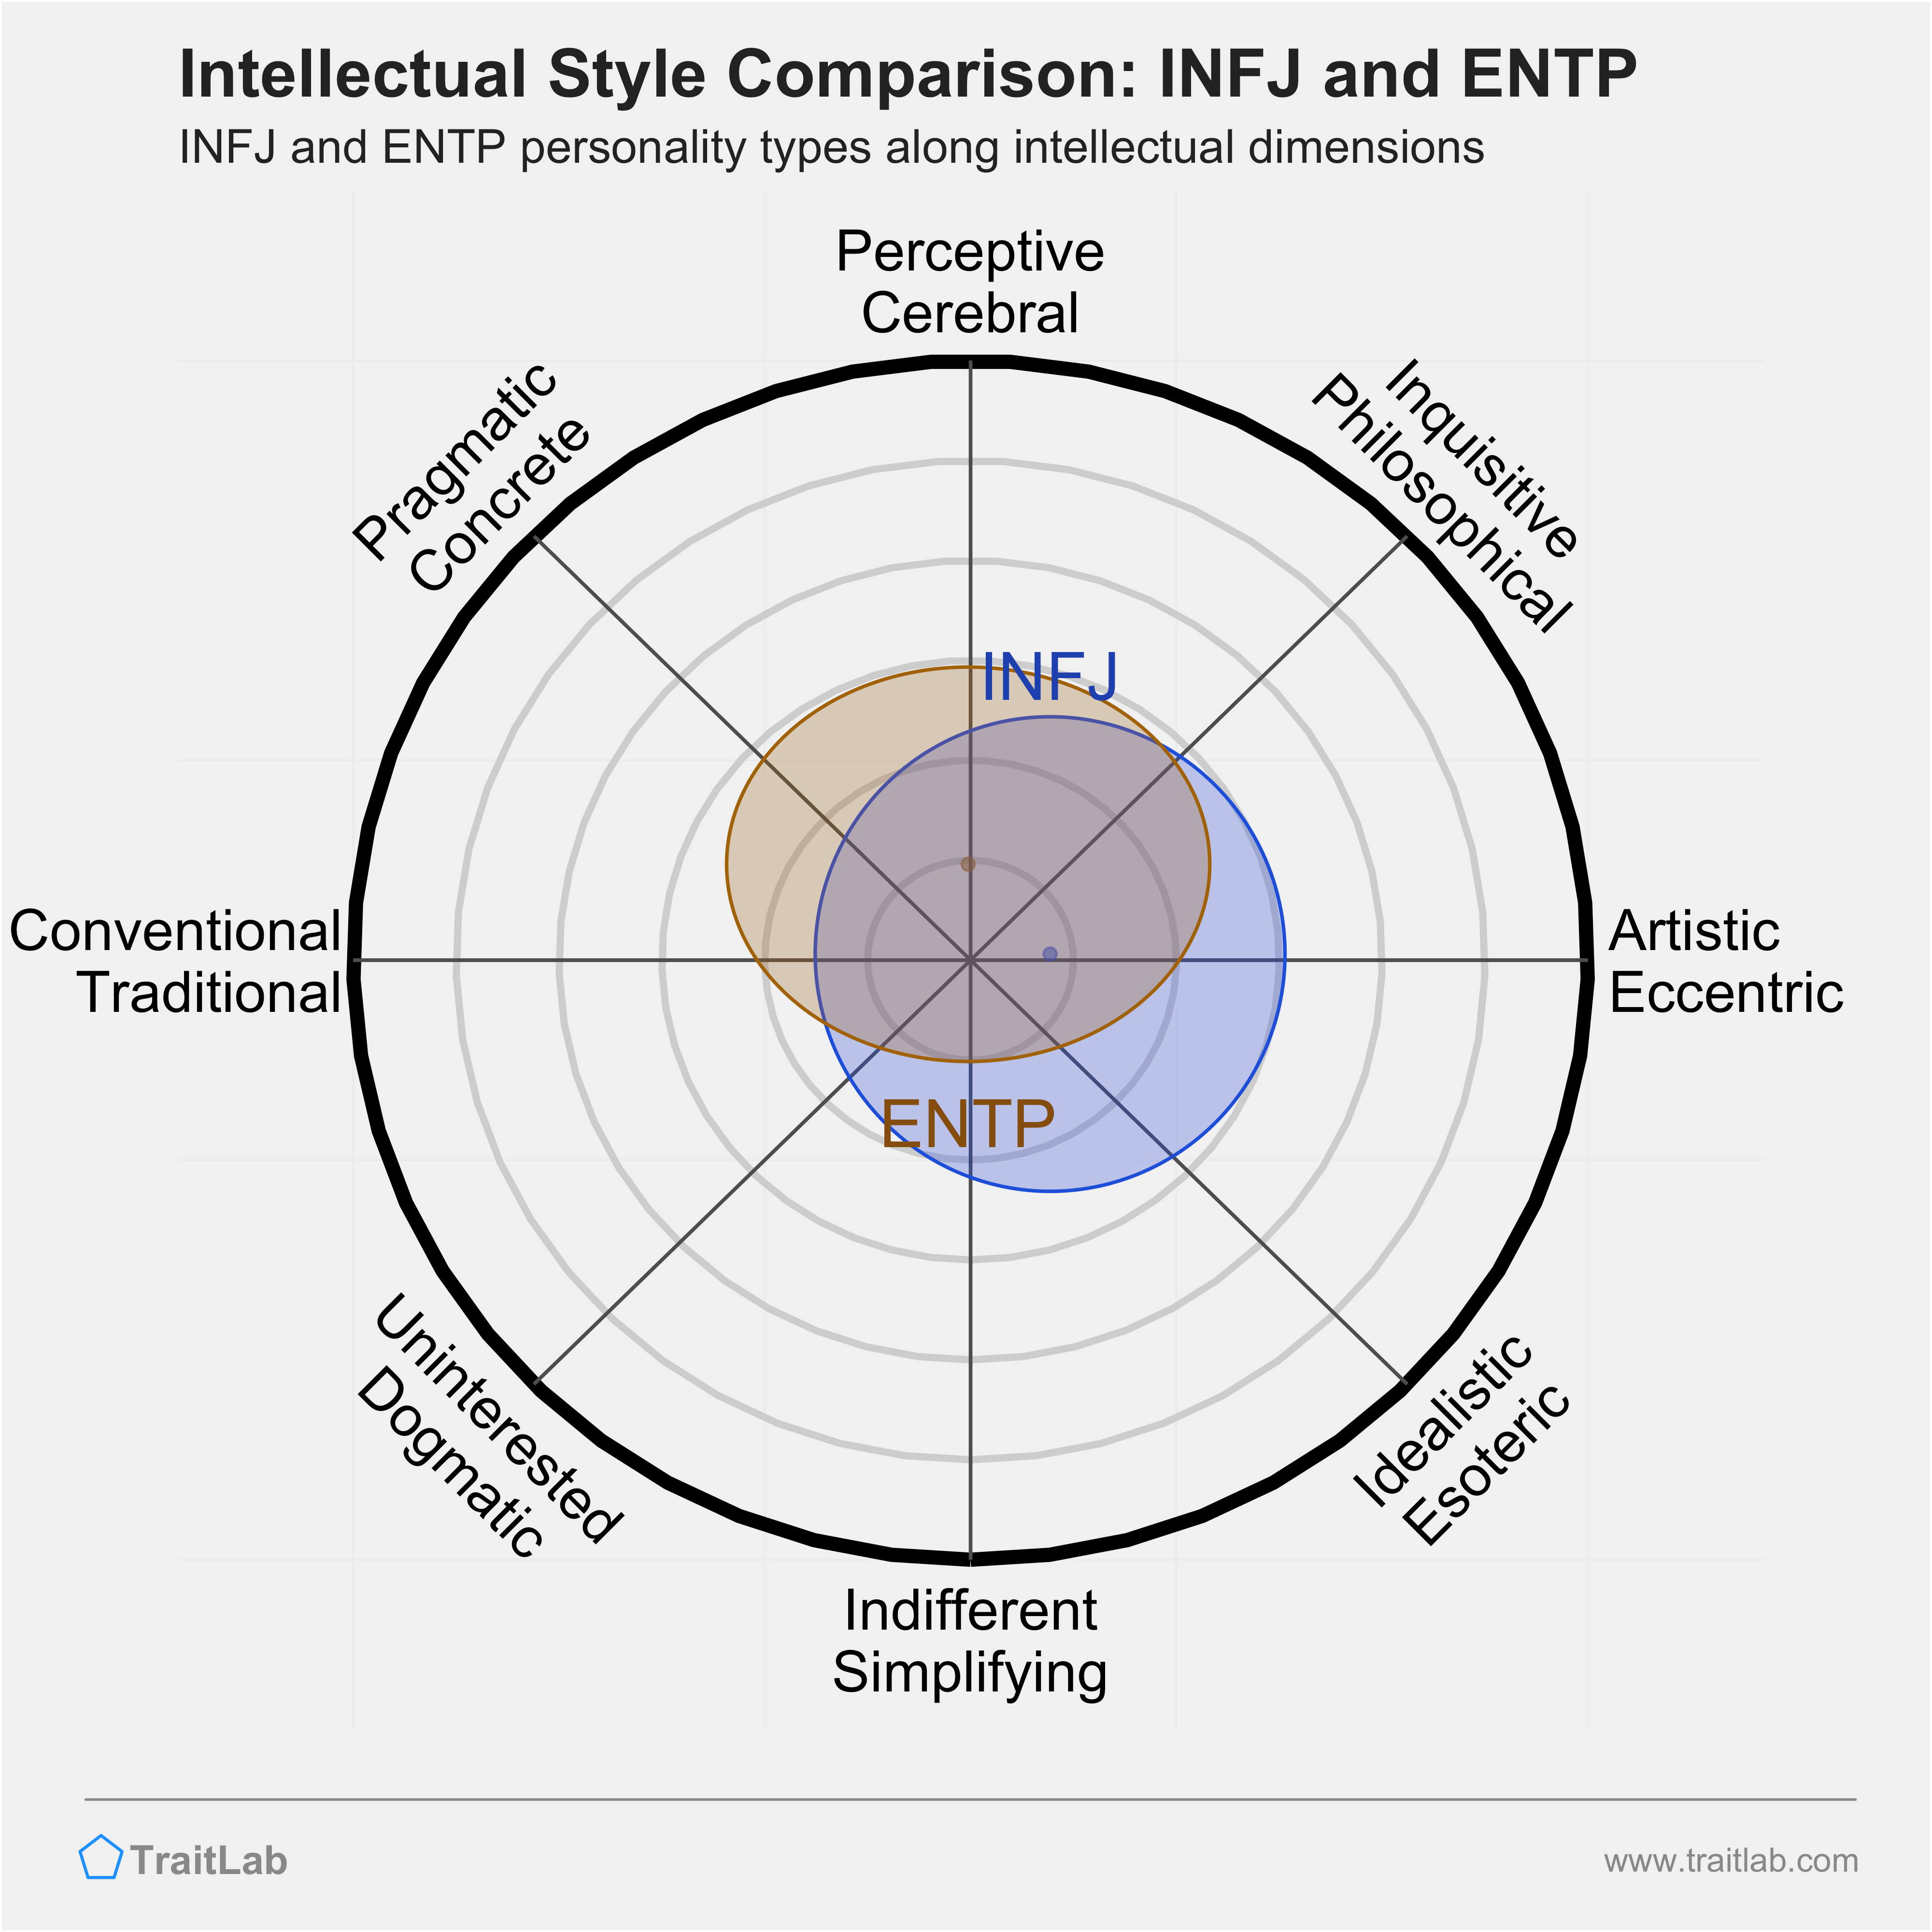 INFJ and ENTP comparison across intellectual dimensions